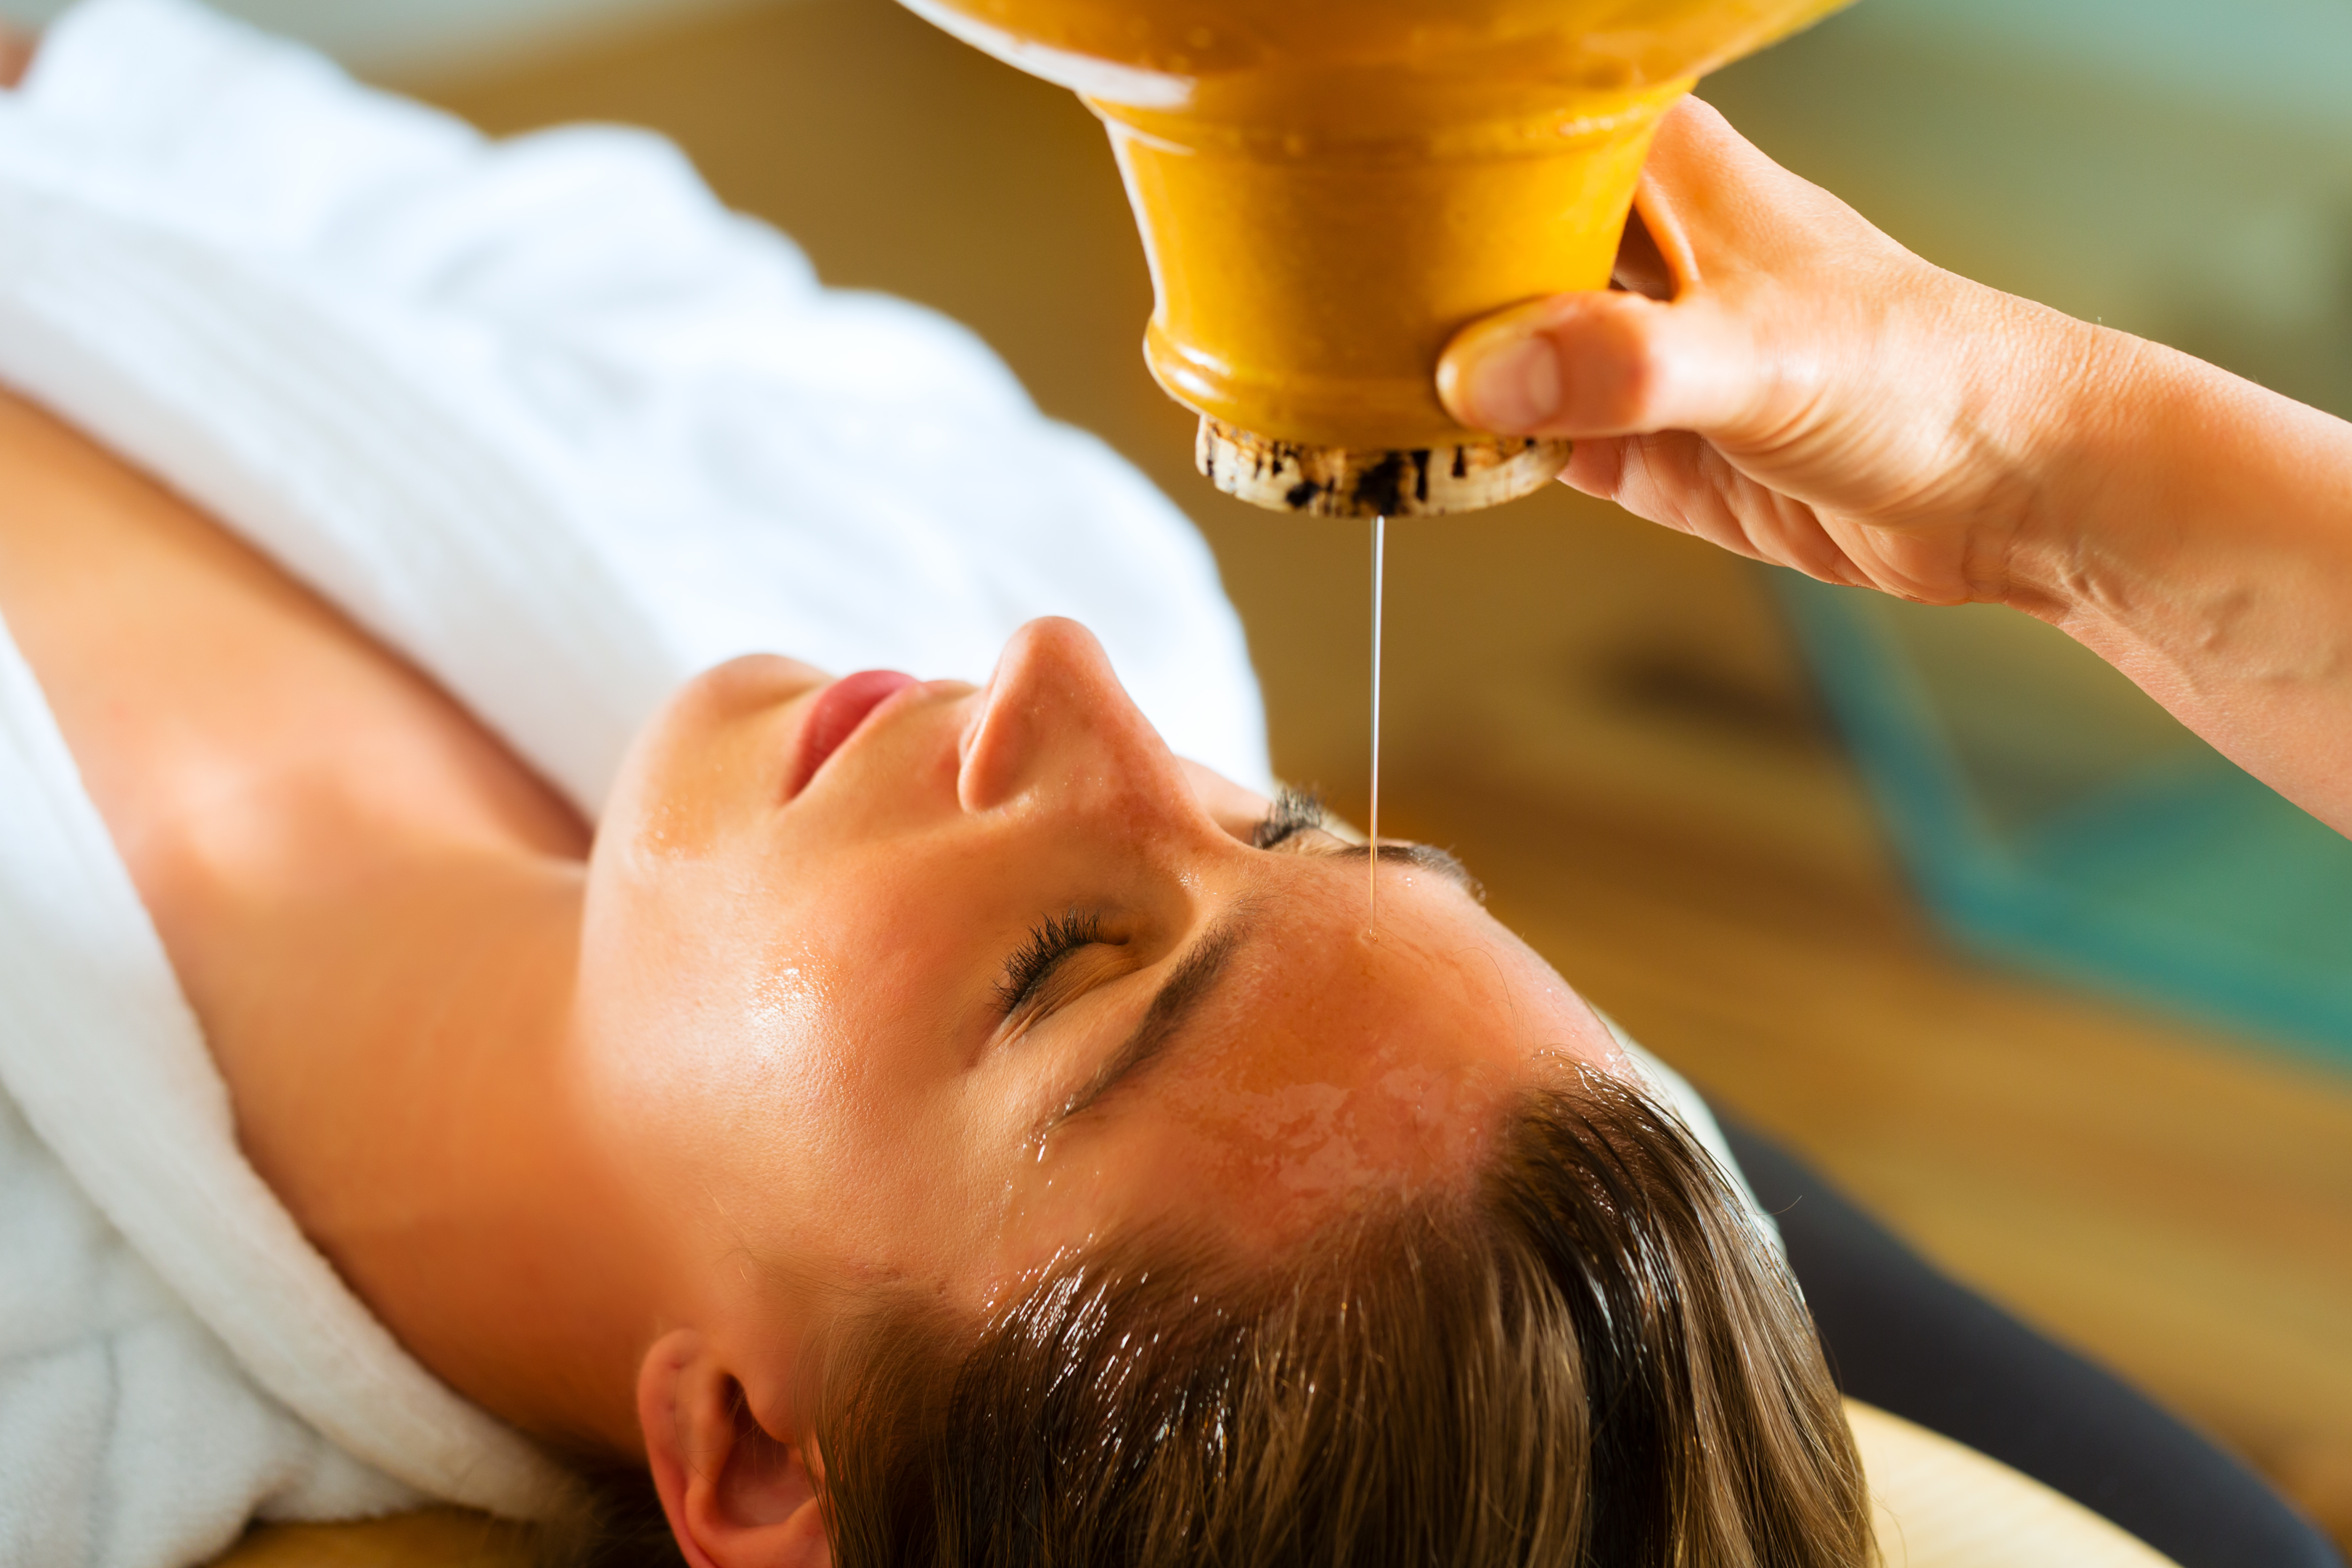 heating massage oil